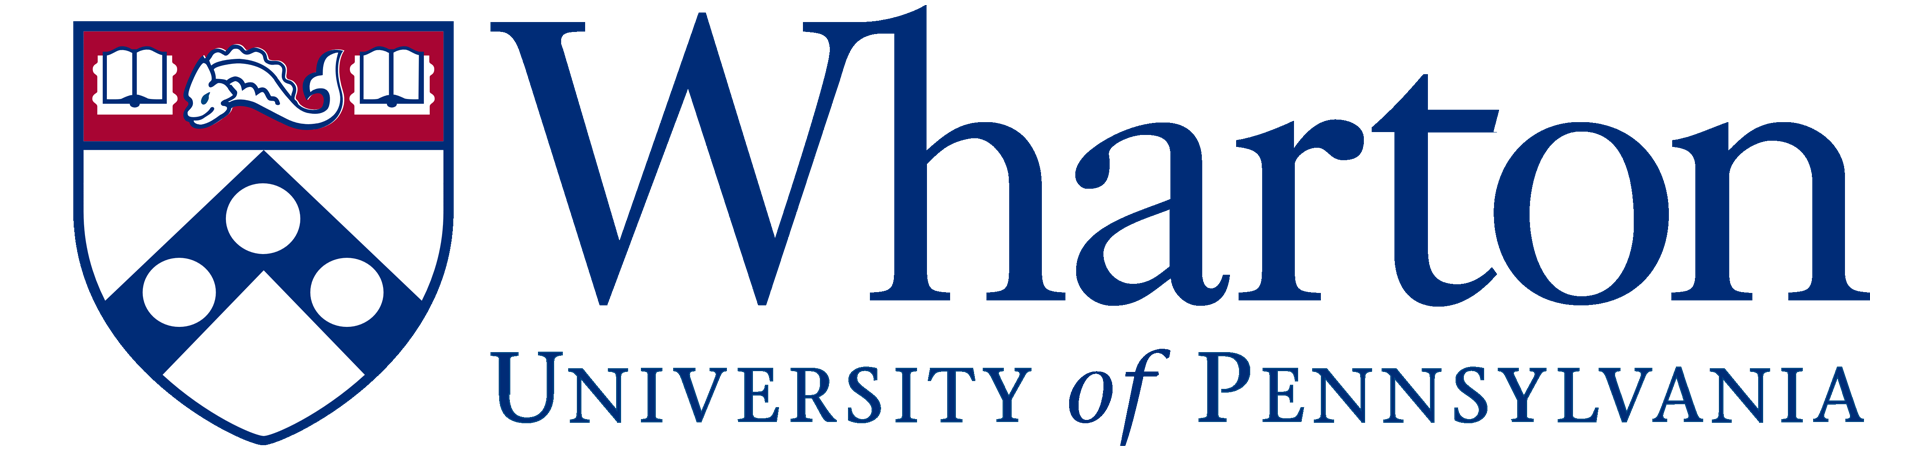 University of Pennsylvania (Wharton) logo